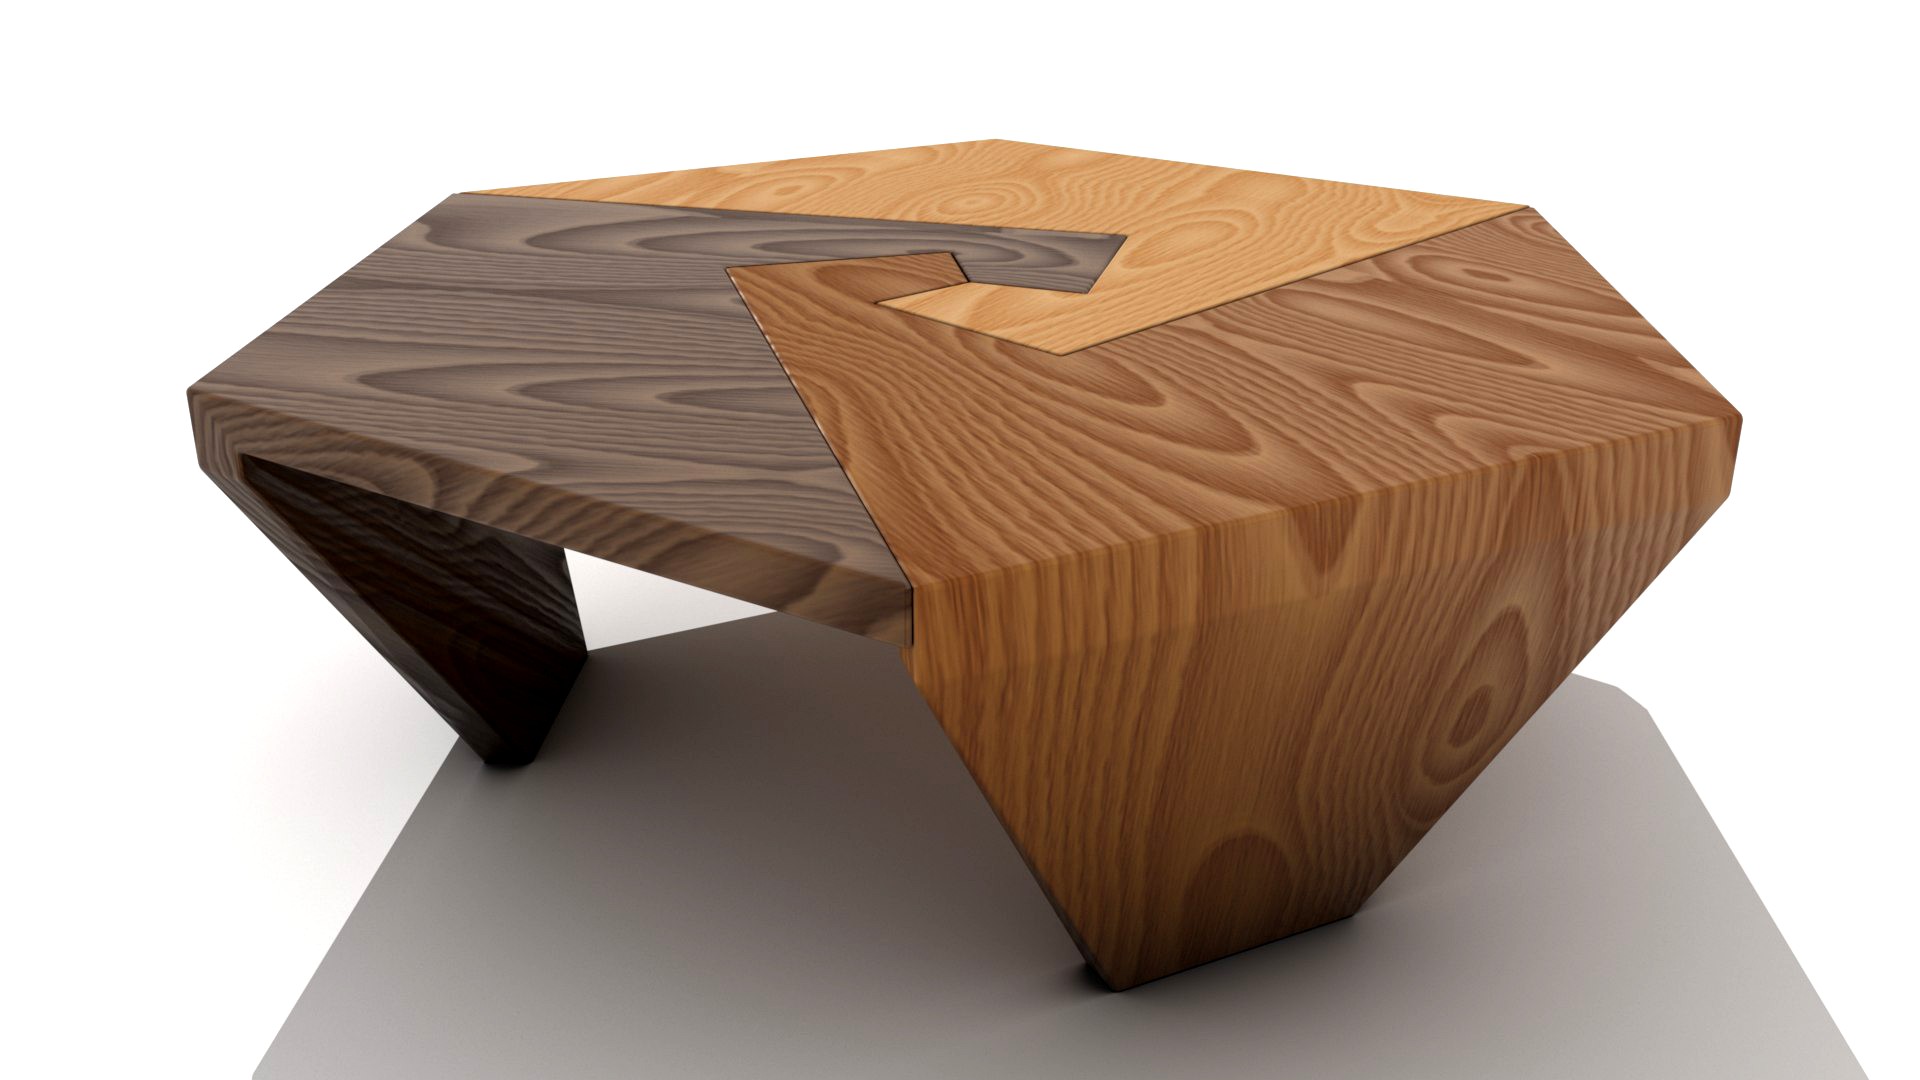 Interlocking Wooden Swirls Coffee Table